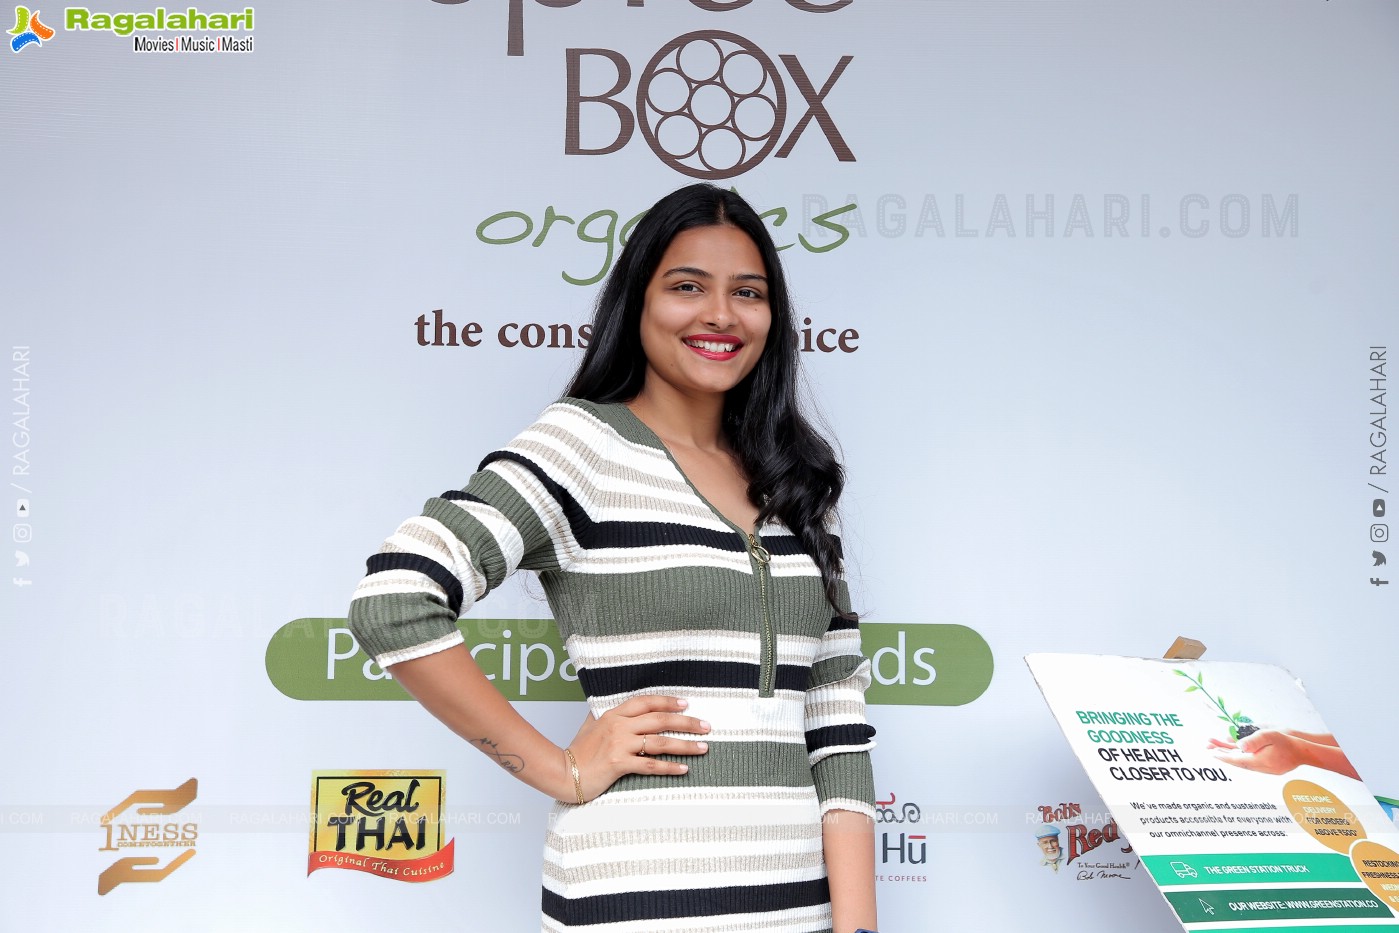 SpiceBox Organics Grand Launch at Madhapur